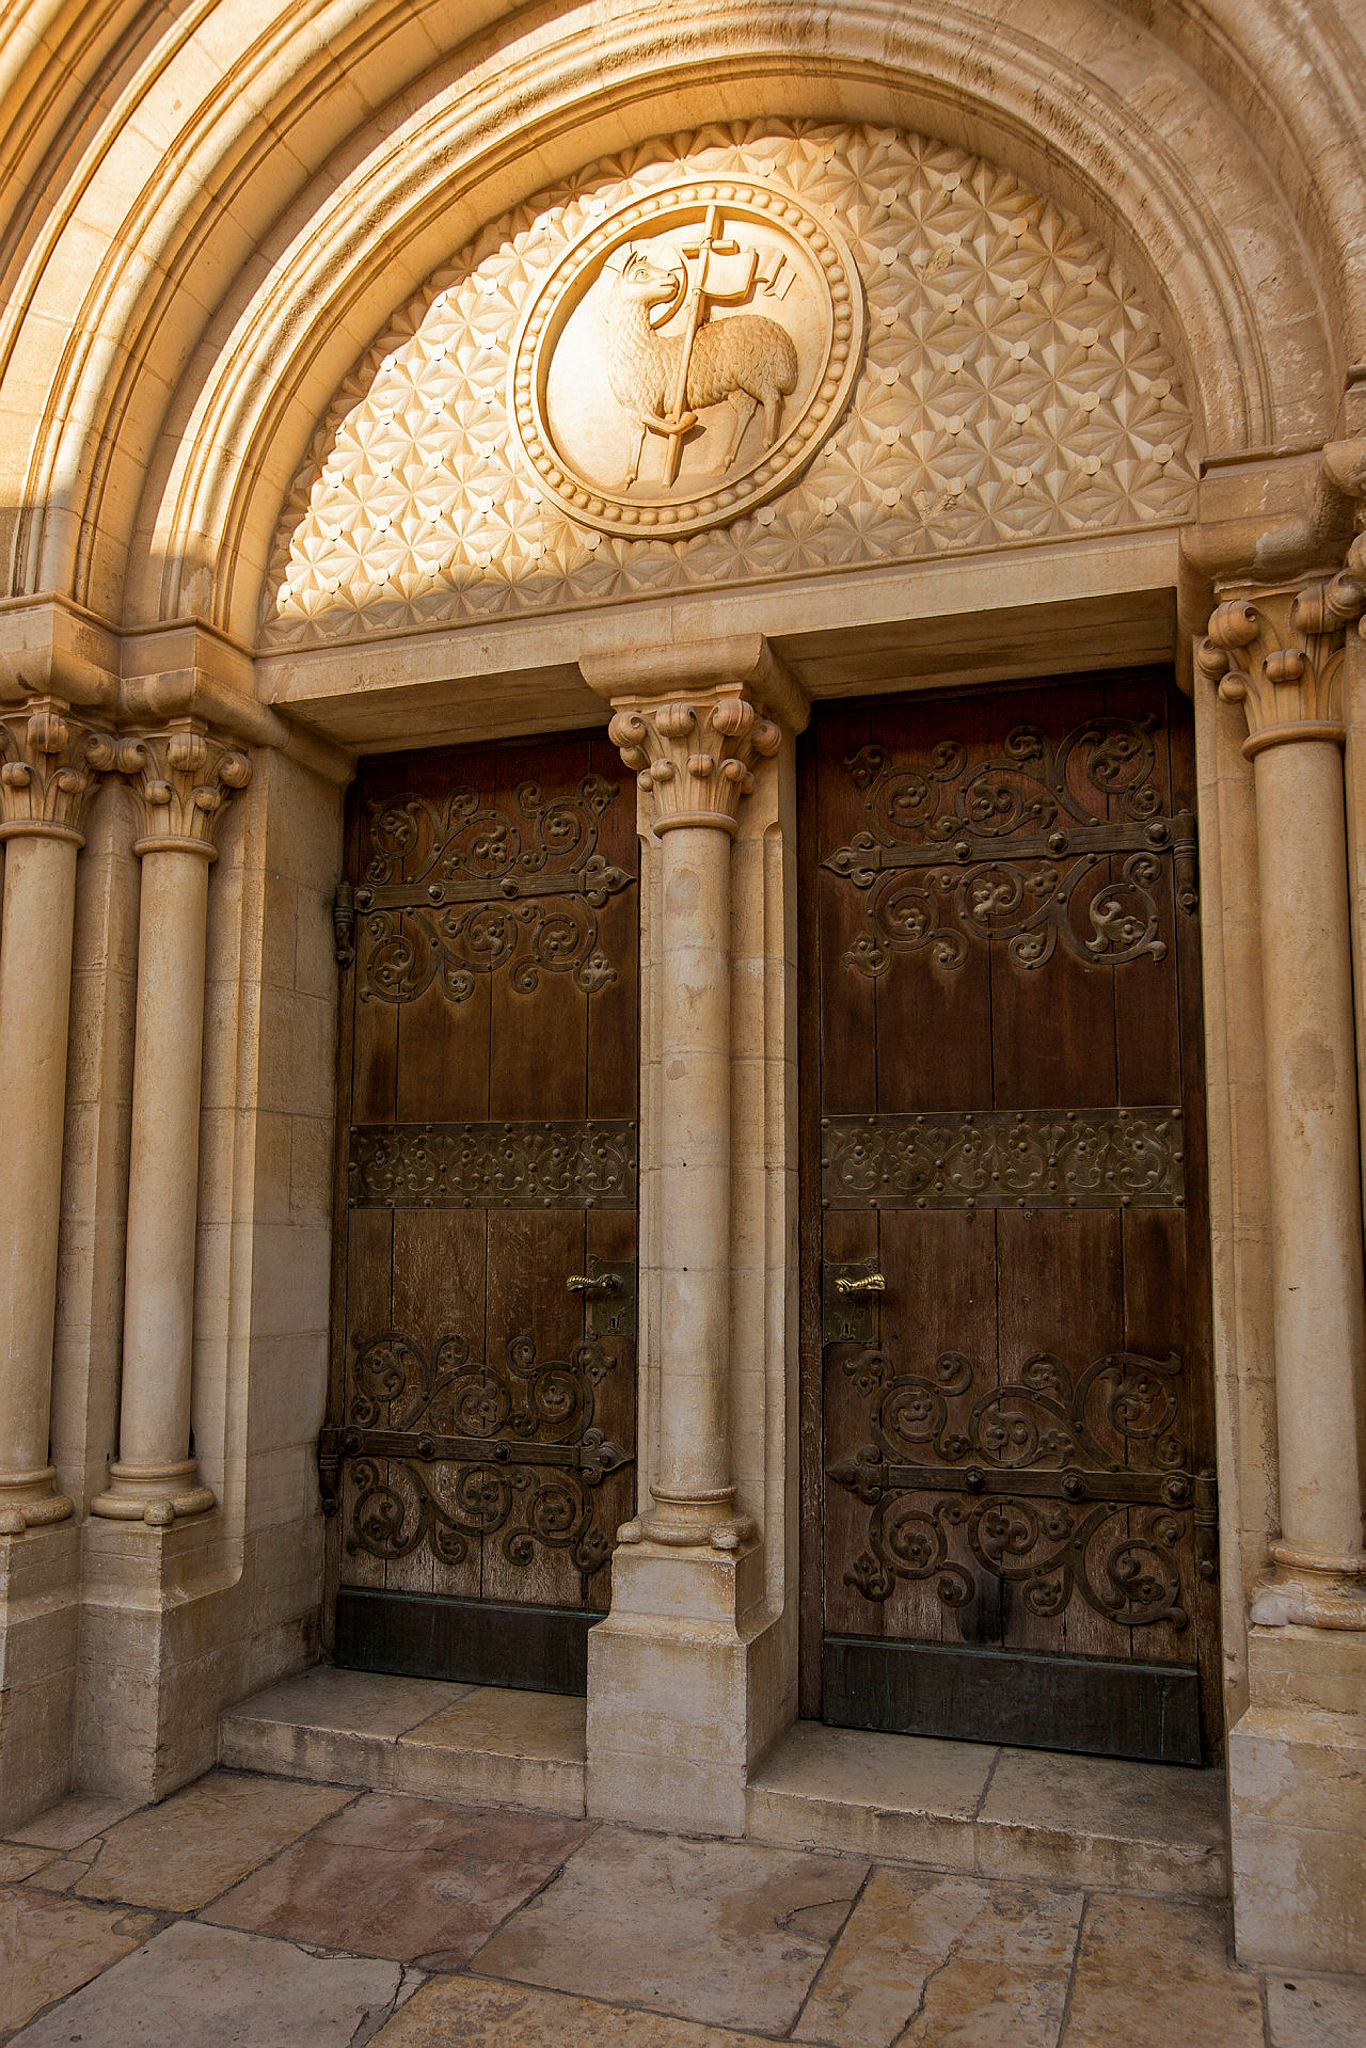 Church Entrance